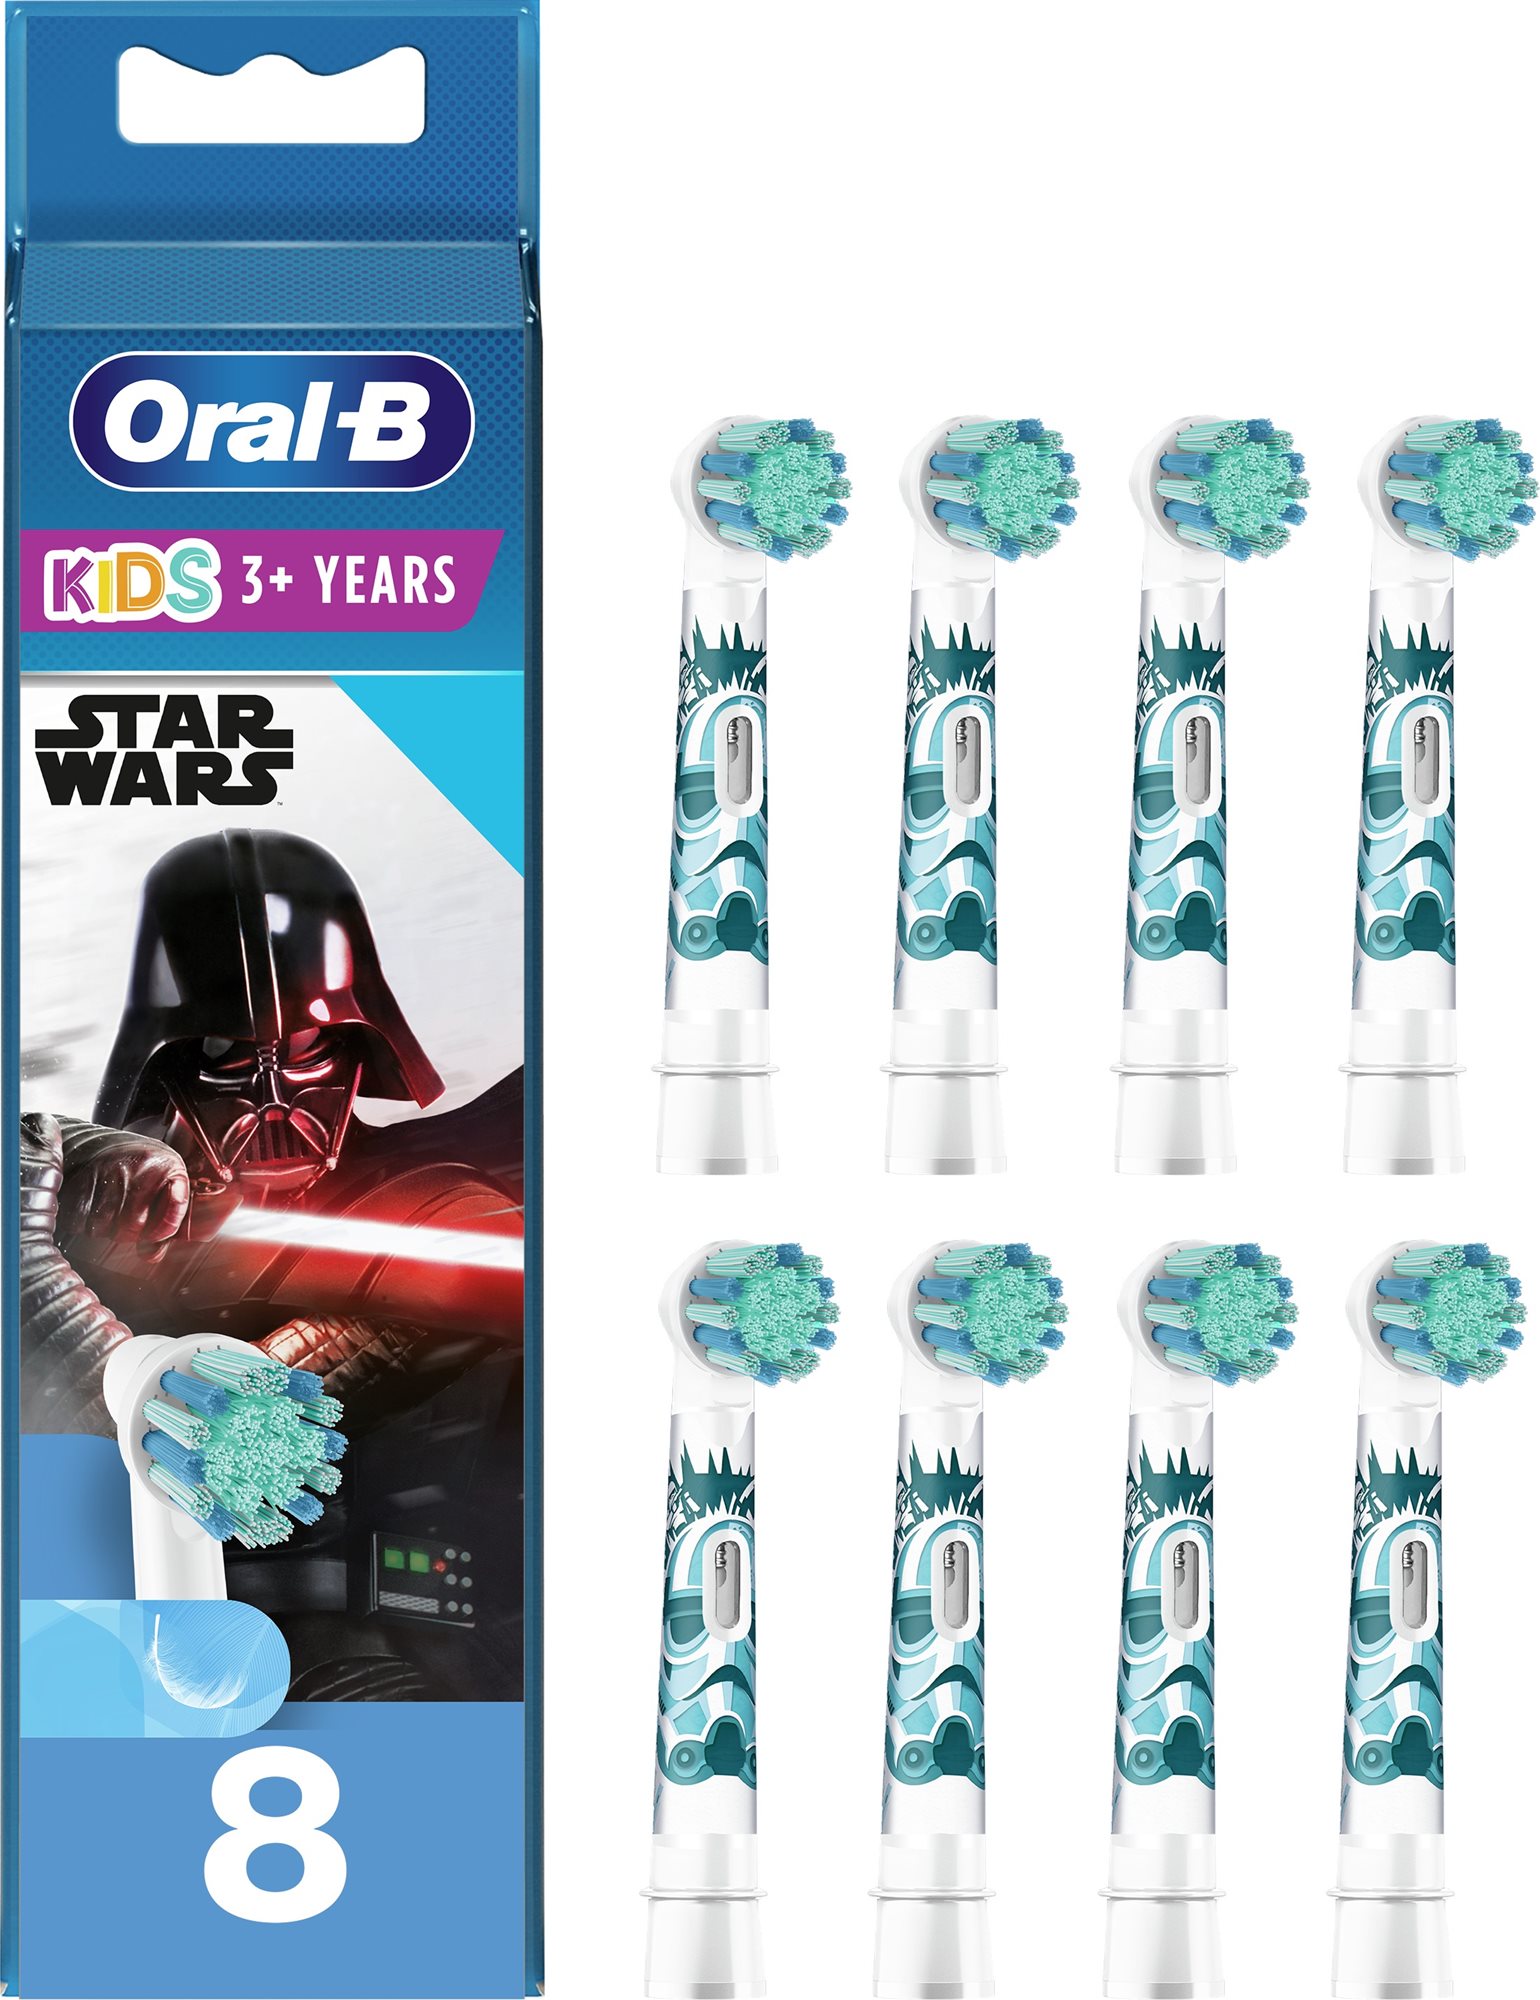 Oral-B Kids Star Wars elektromos fogkefefefej, 4 fogkefefej + Oral-B Kids Star Wars fogkefefefej